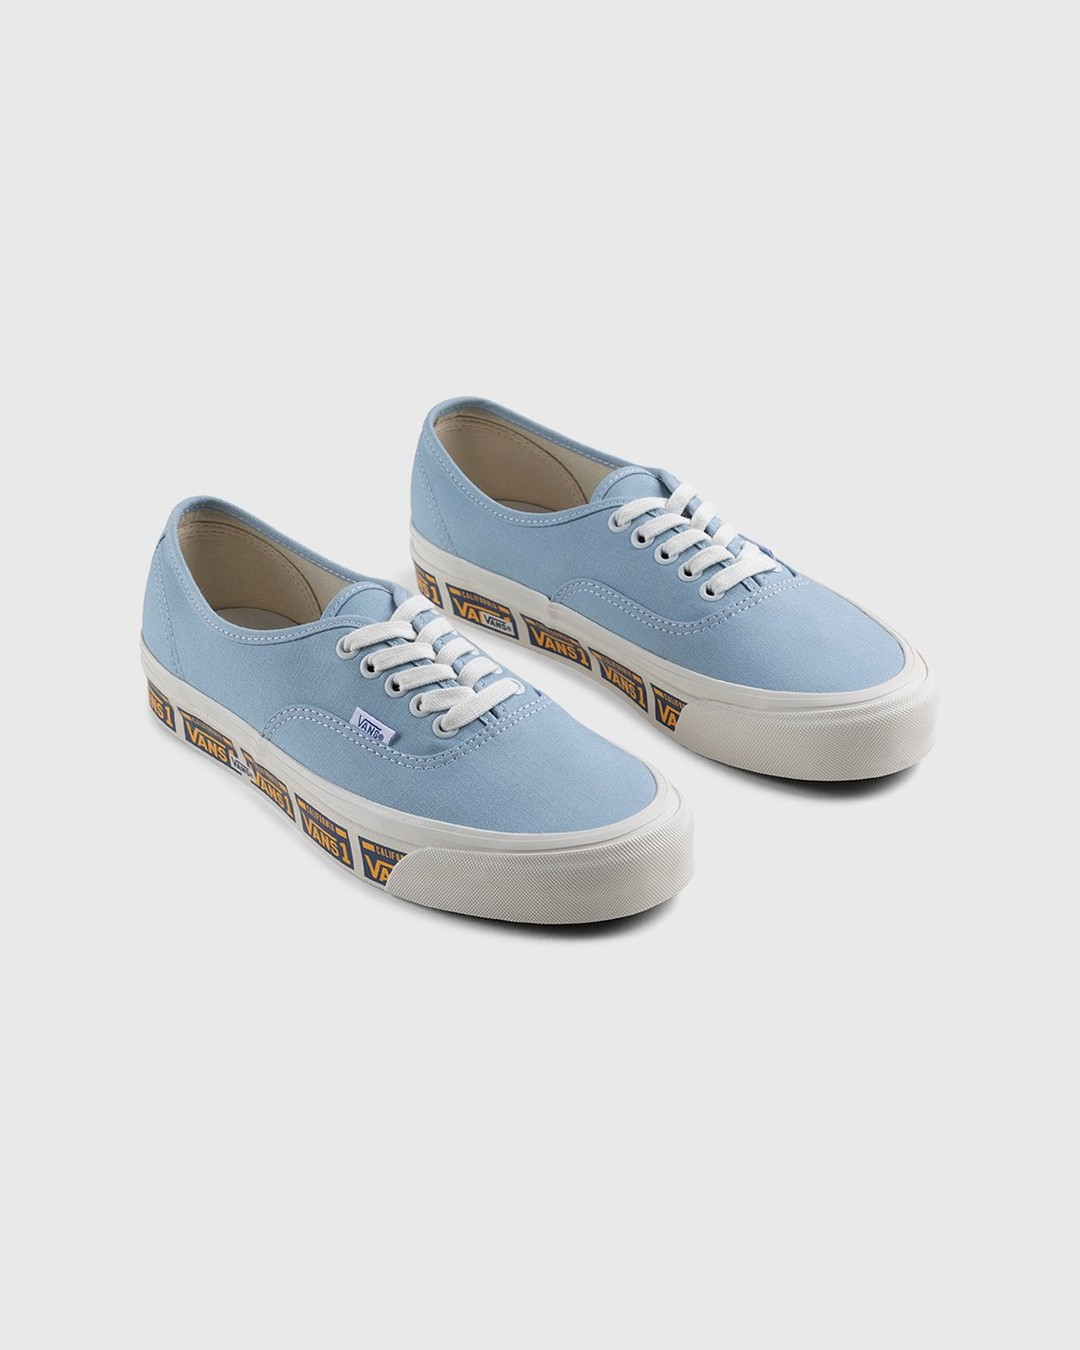 Vans – Anaheim Factory Authentic 44 DX Vanity Plate Lightblue - Sneakers - Blue - Image 5